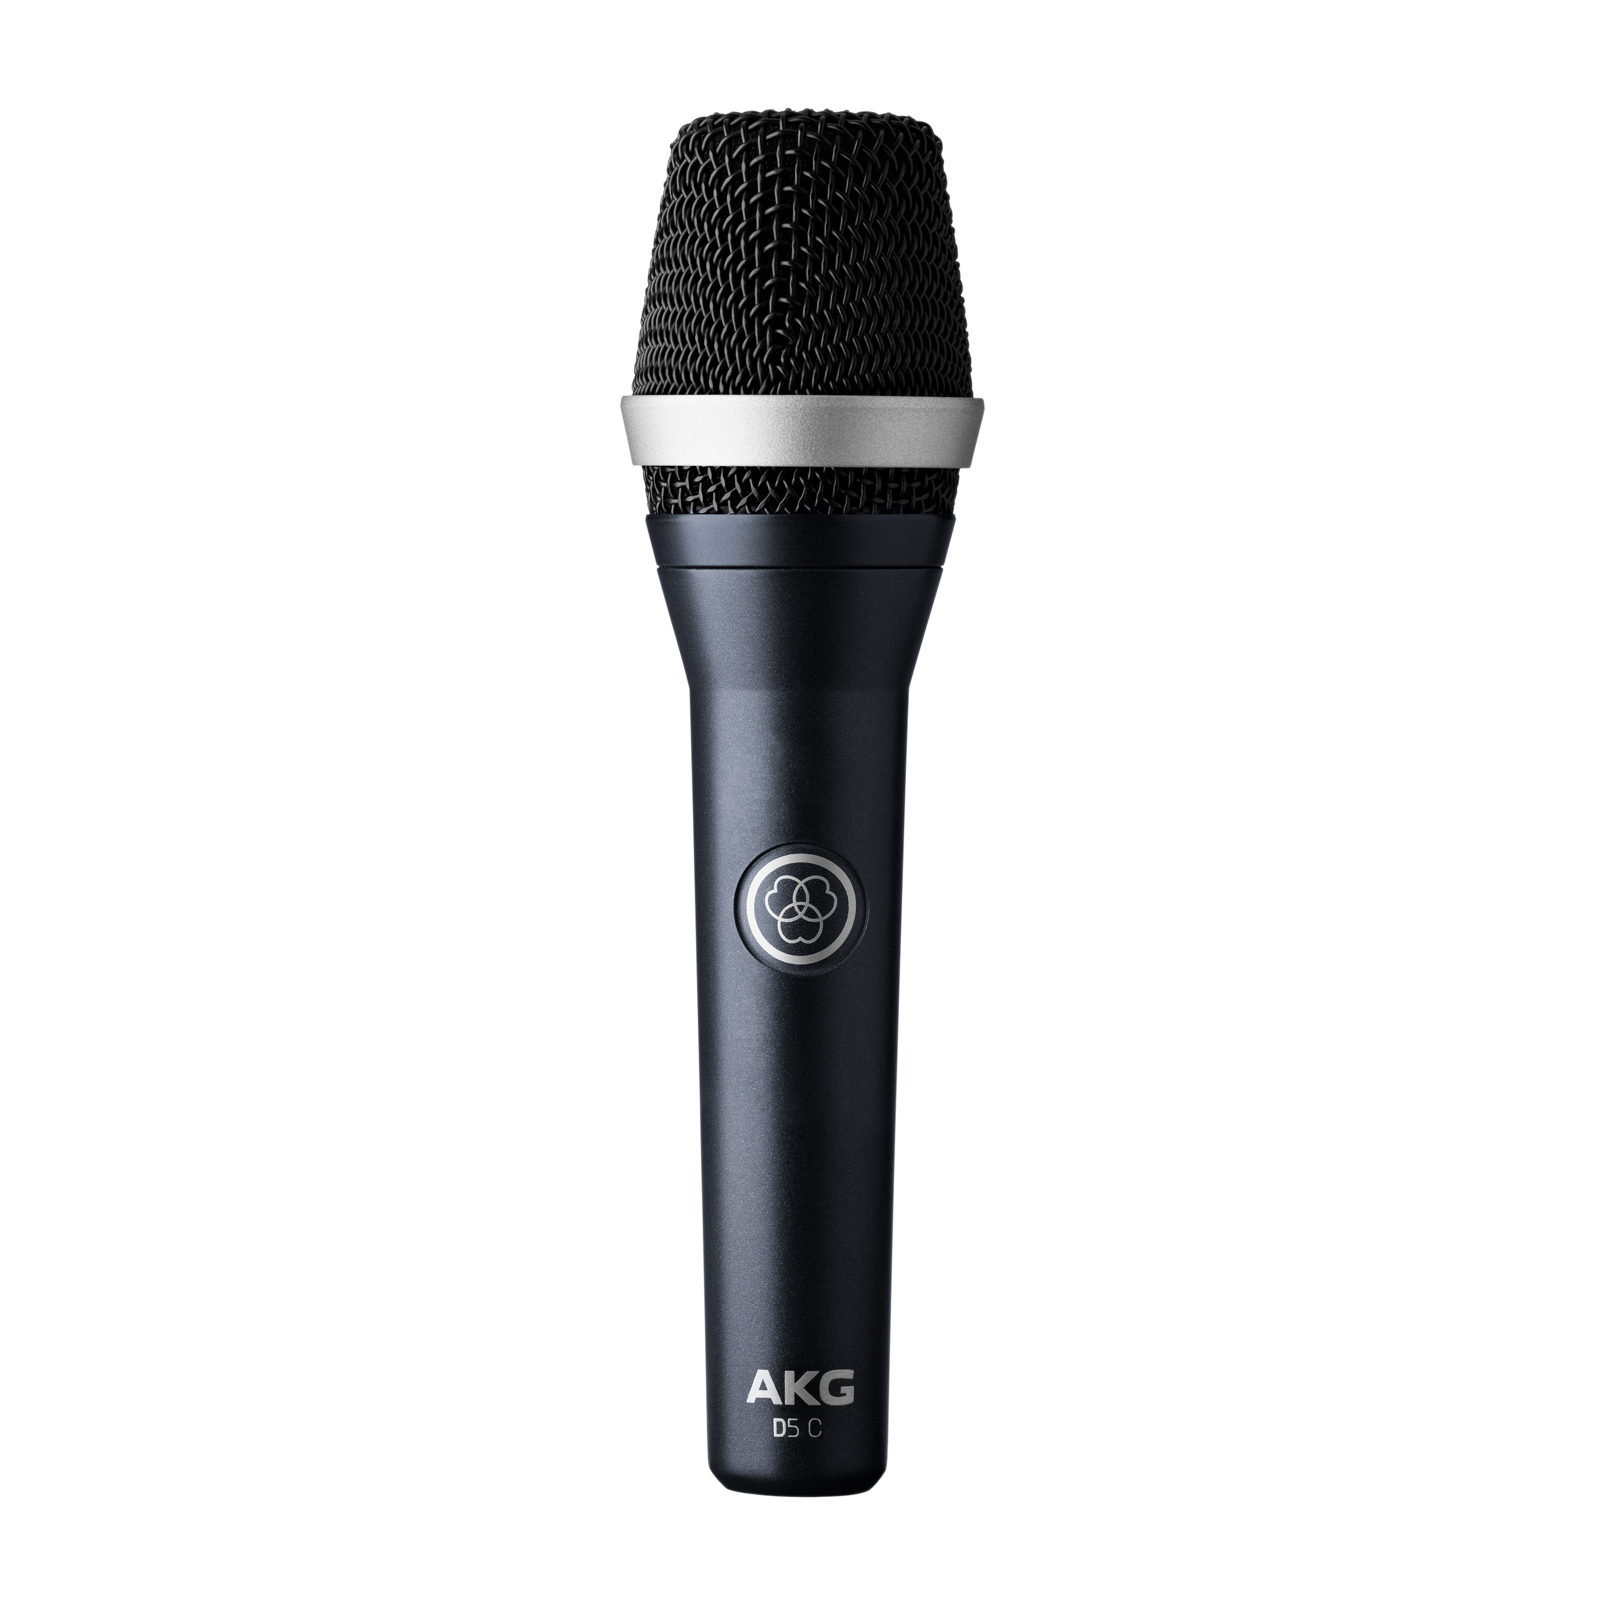 AKG D5 C Professional Dynamic Cardioid Pattern Vocal Microphone D5C Mic - 305broadcast